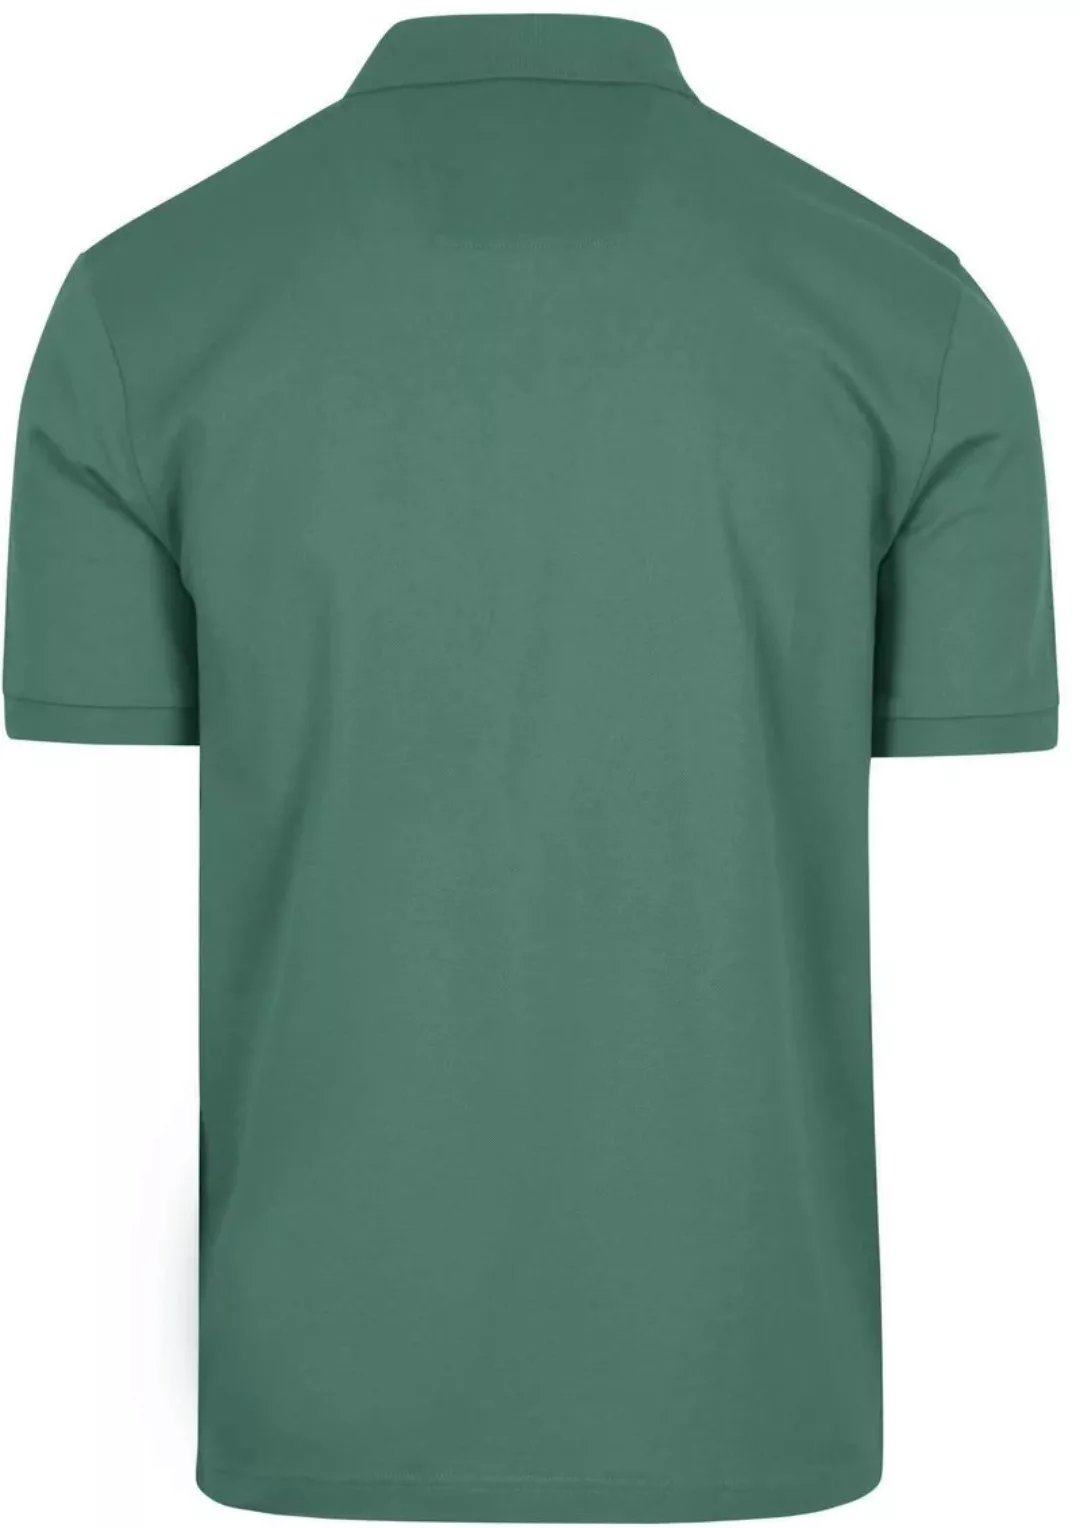 OLYMP Poloshirt Piqué Grün - Größe XL günstig online kaufen